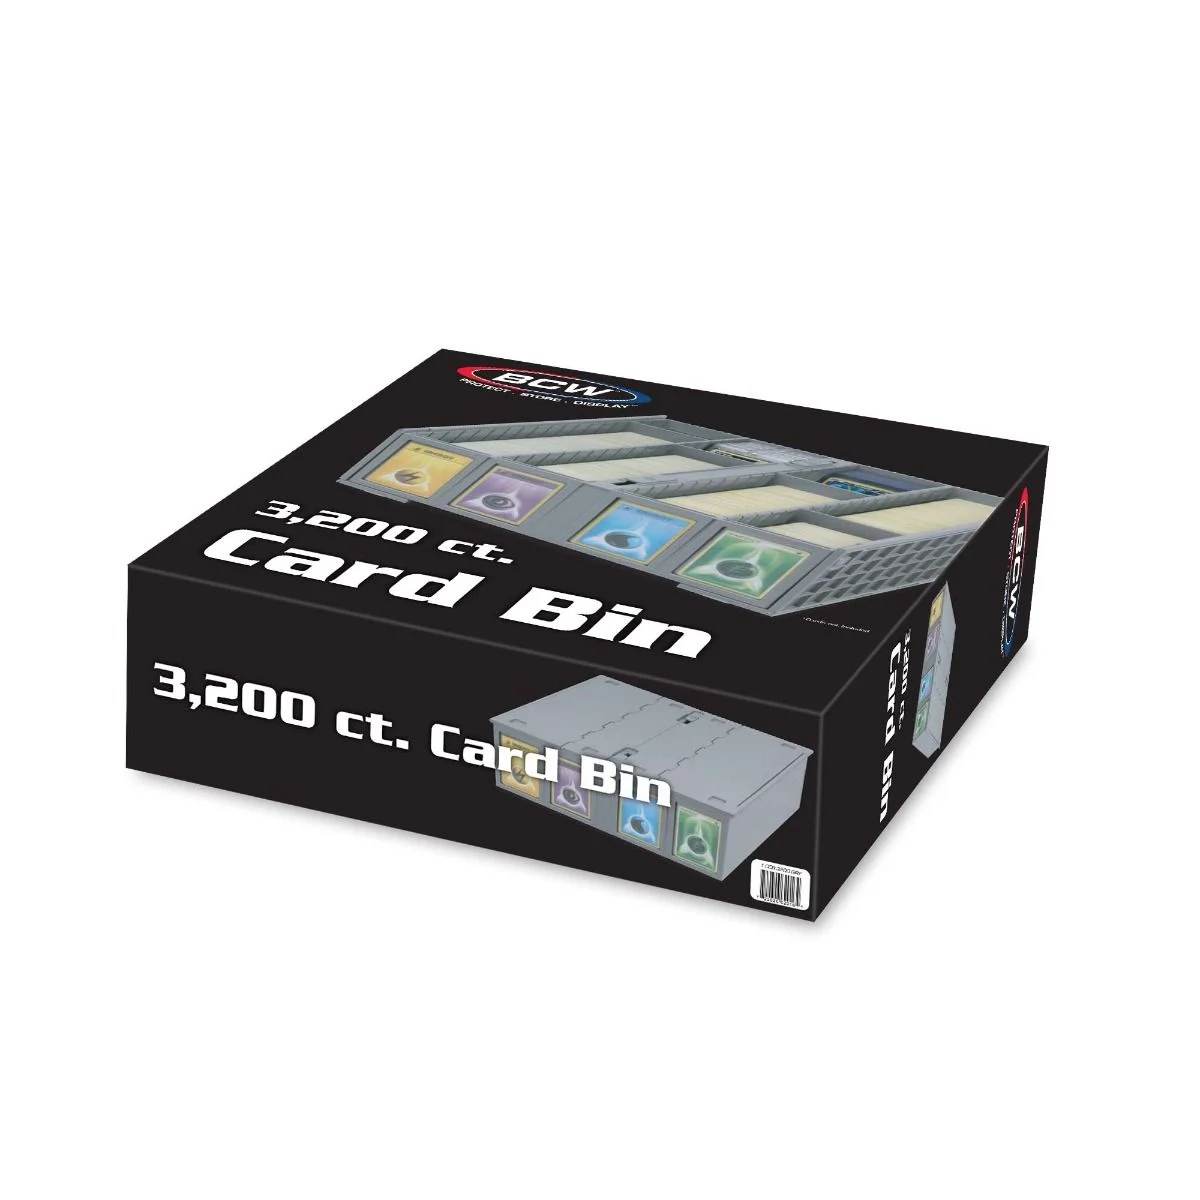 BCW Collectible Card Bin - 3200